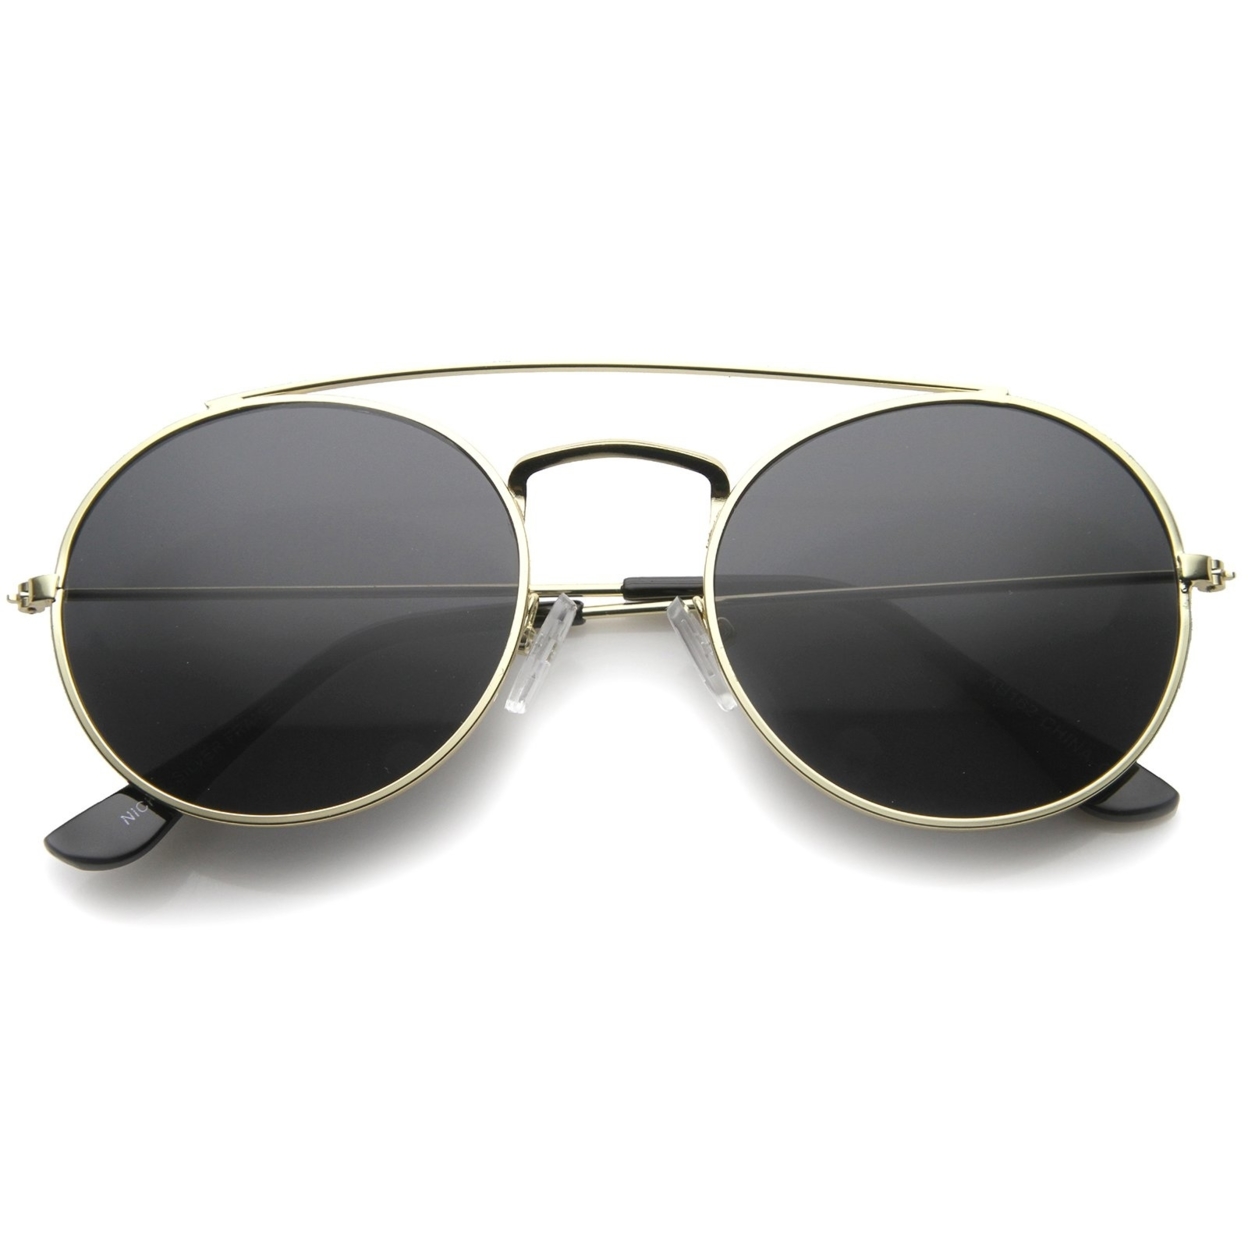 Retro Fashion Minimal Thin Metal Brow Bar Round Sunglasses 52mm - Gold / Smoke